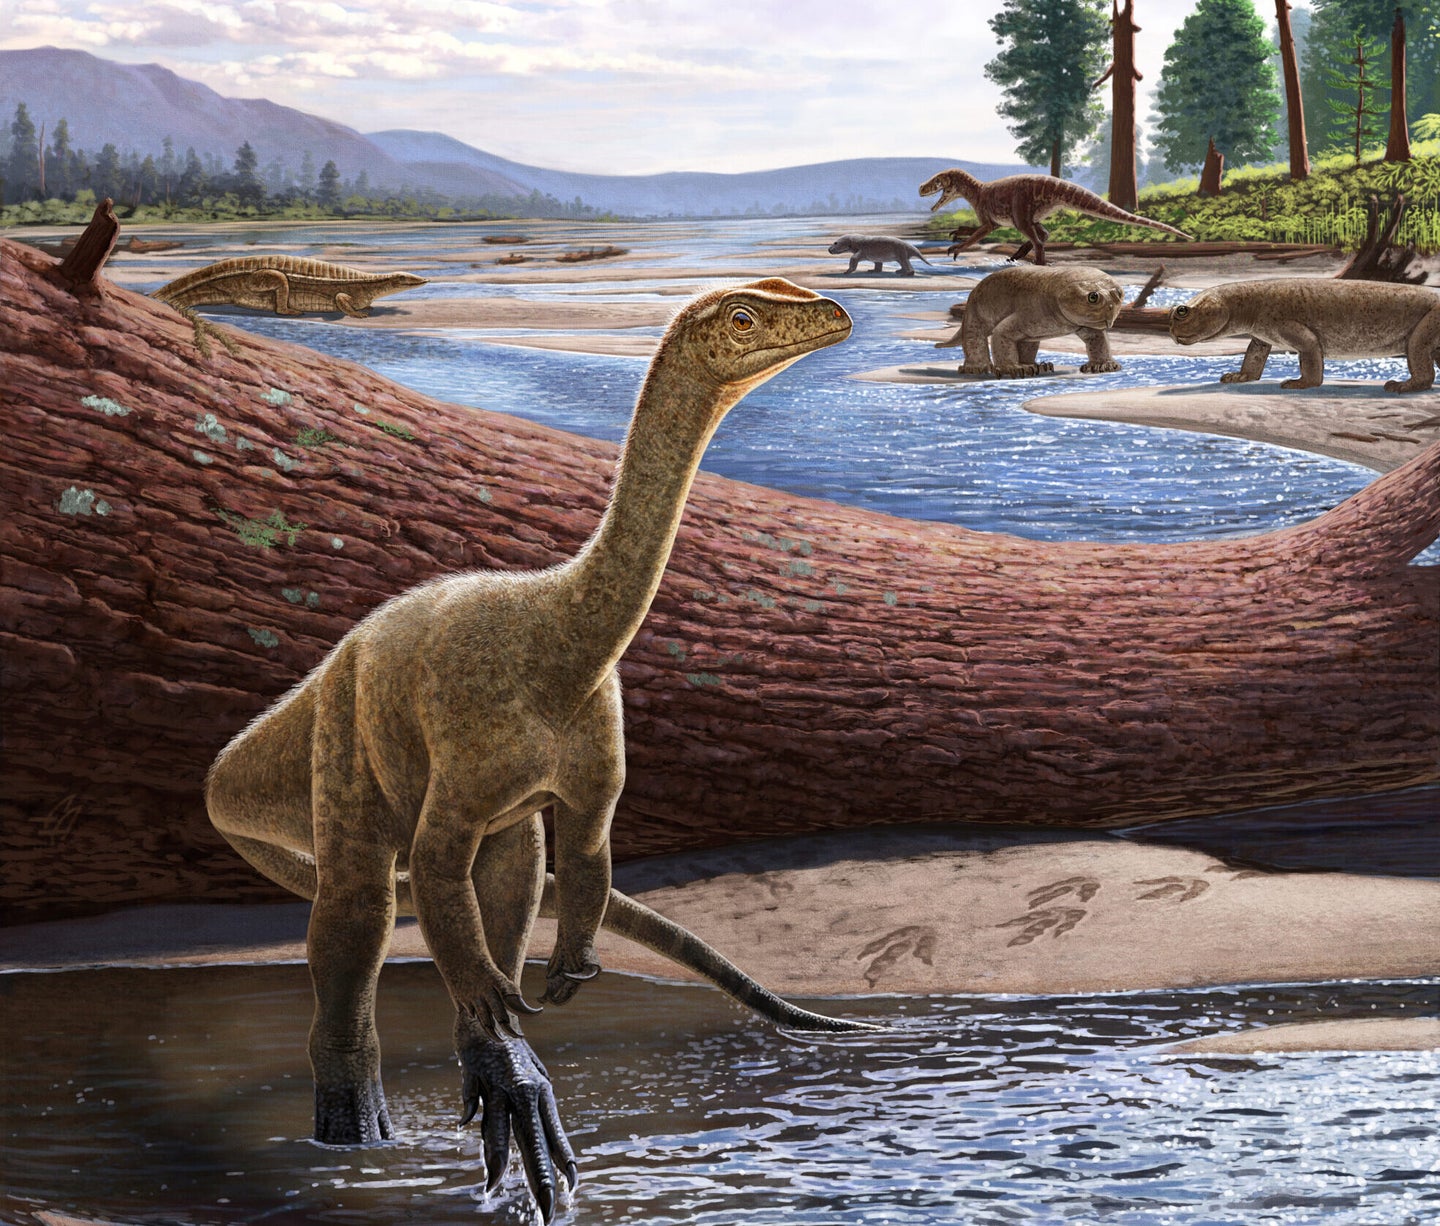 Artistic reconstruction of Mbiresaurus raathi